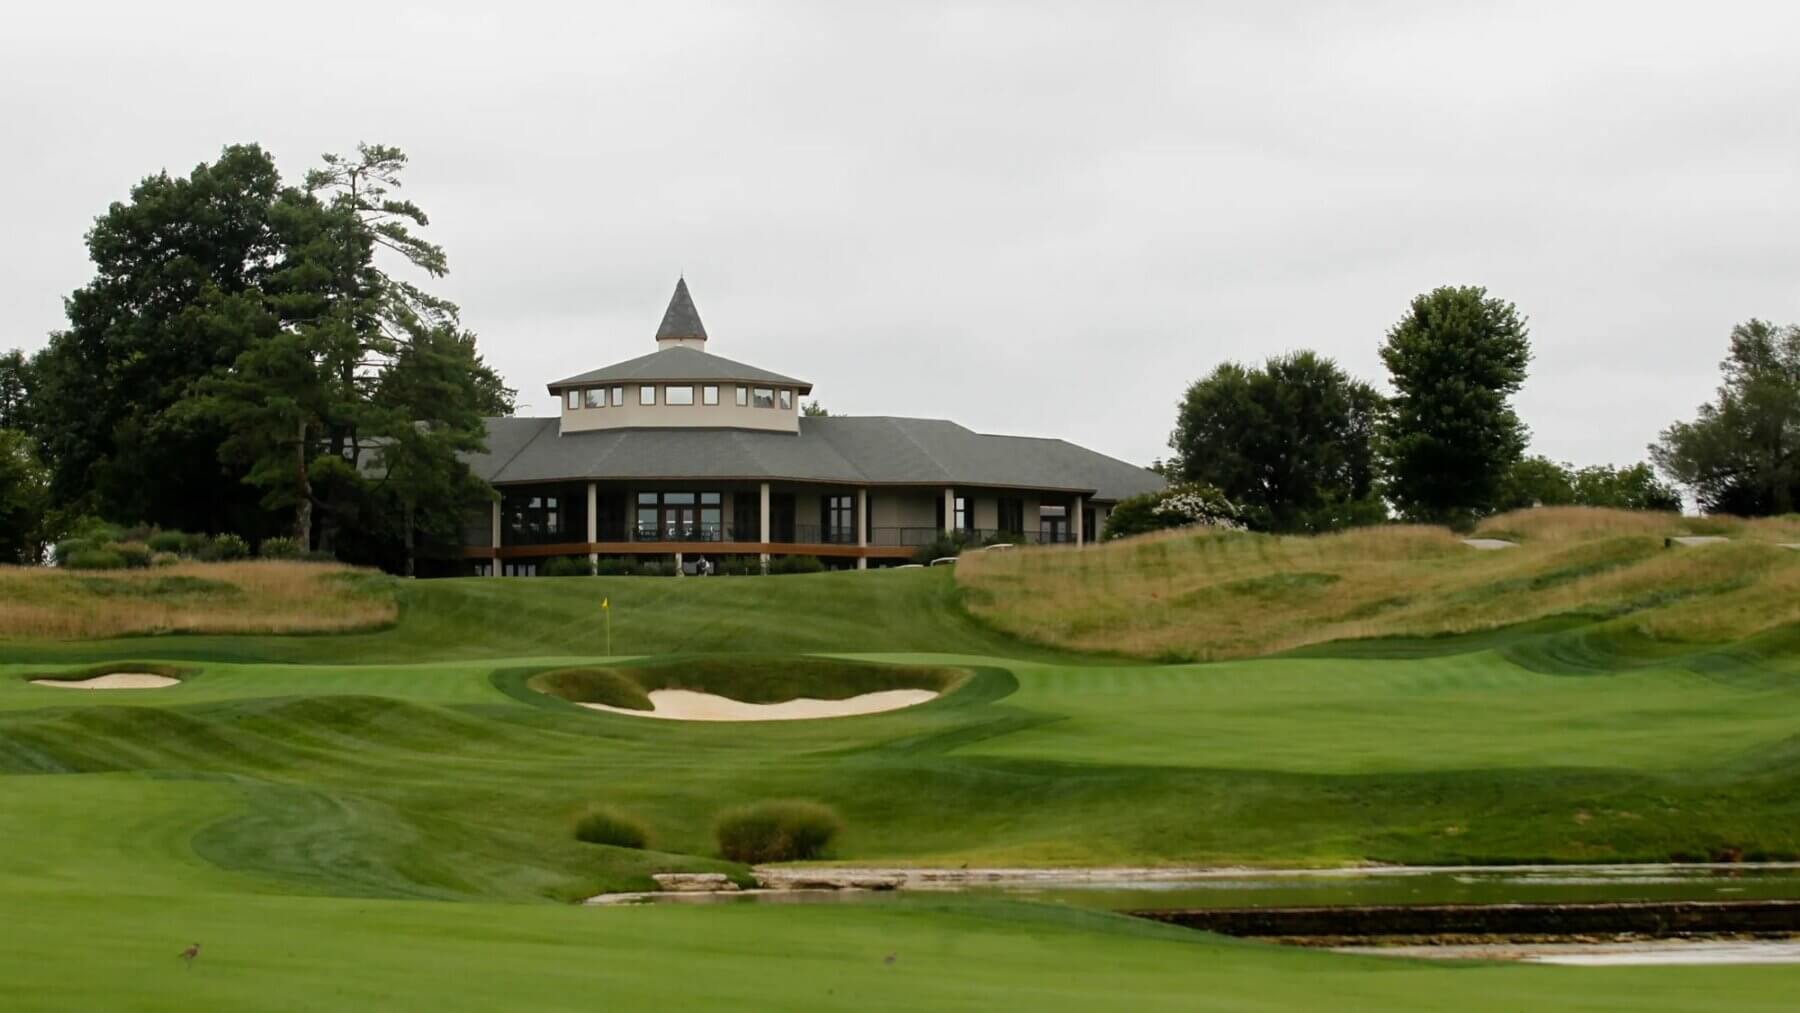 Valhalla golf course in Kentucky